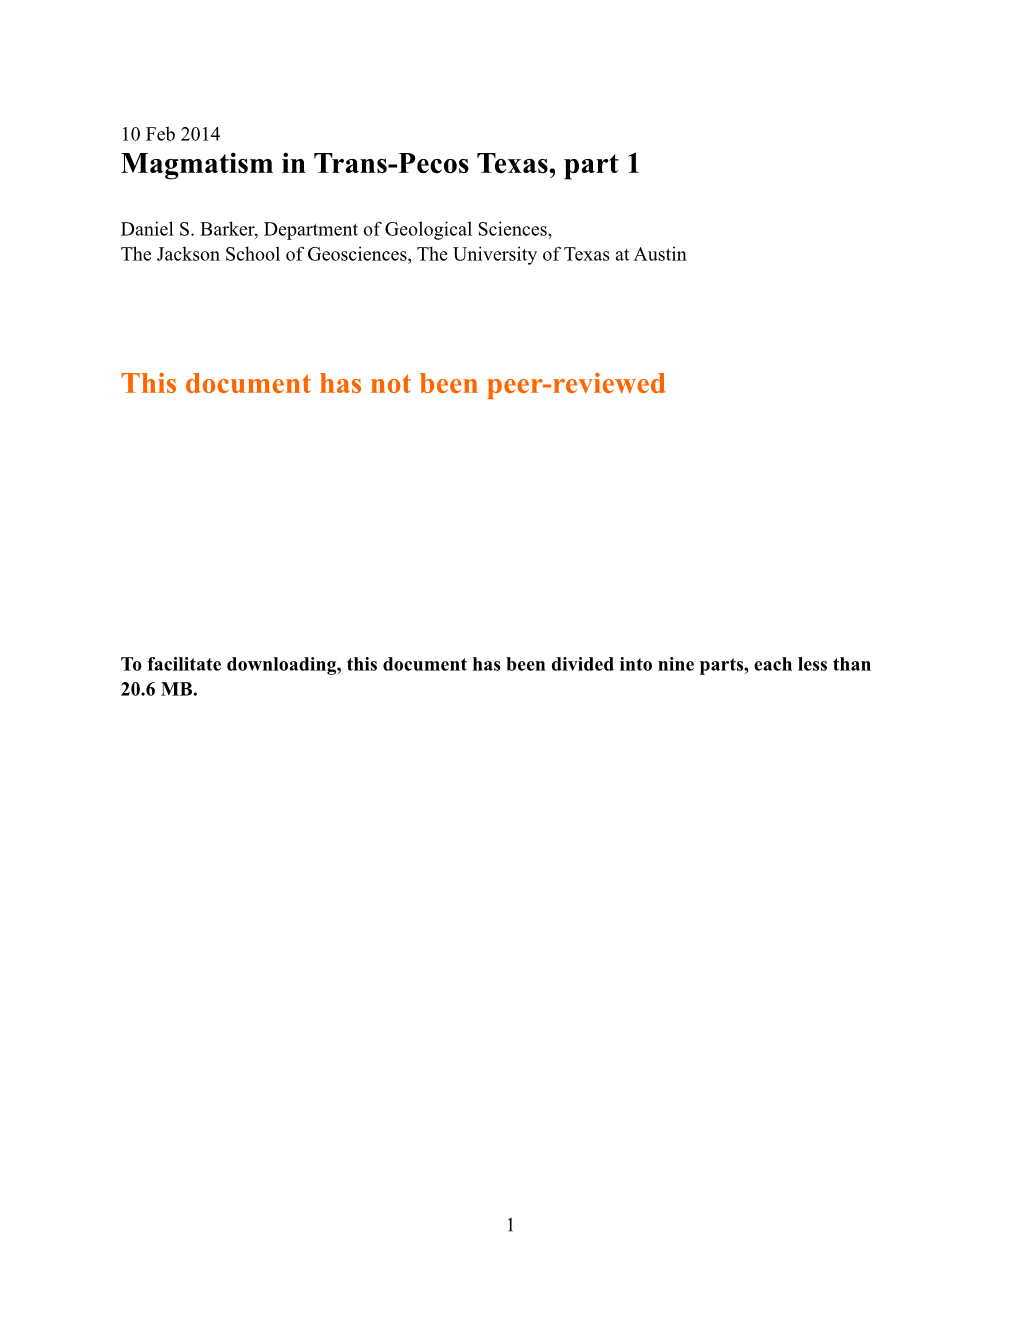 Trans-Pecos Magmatism Part 1